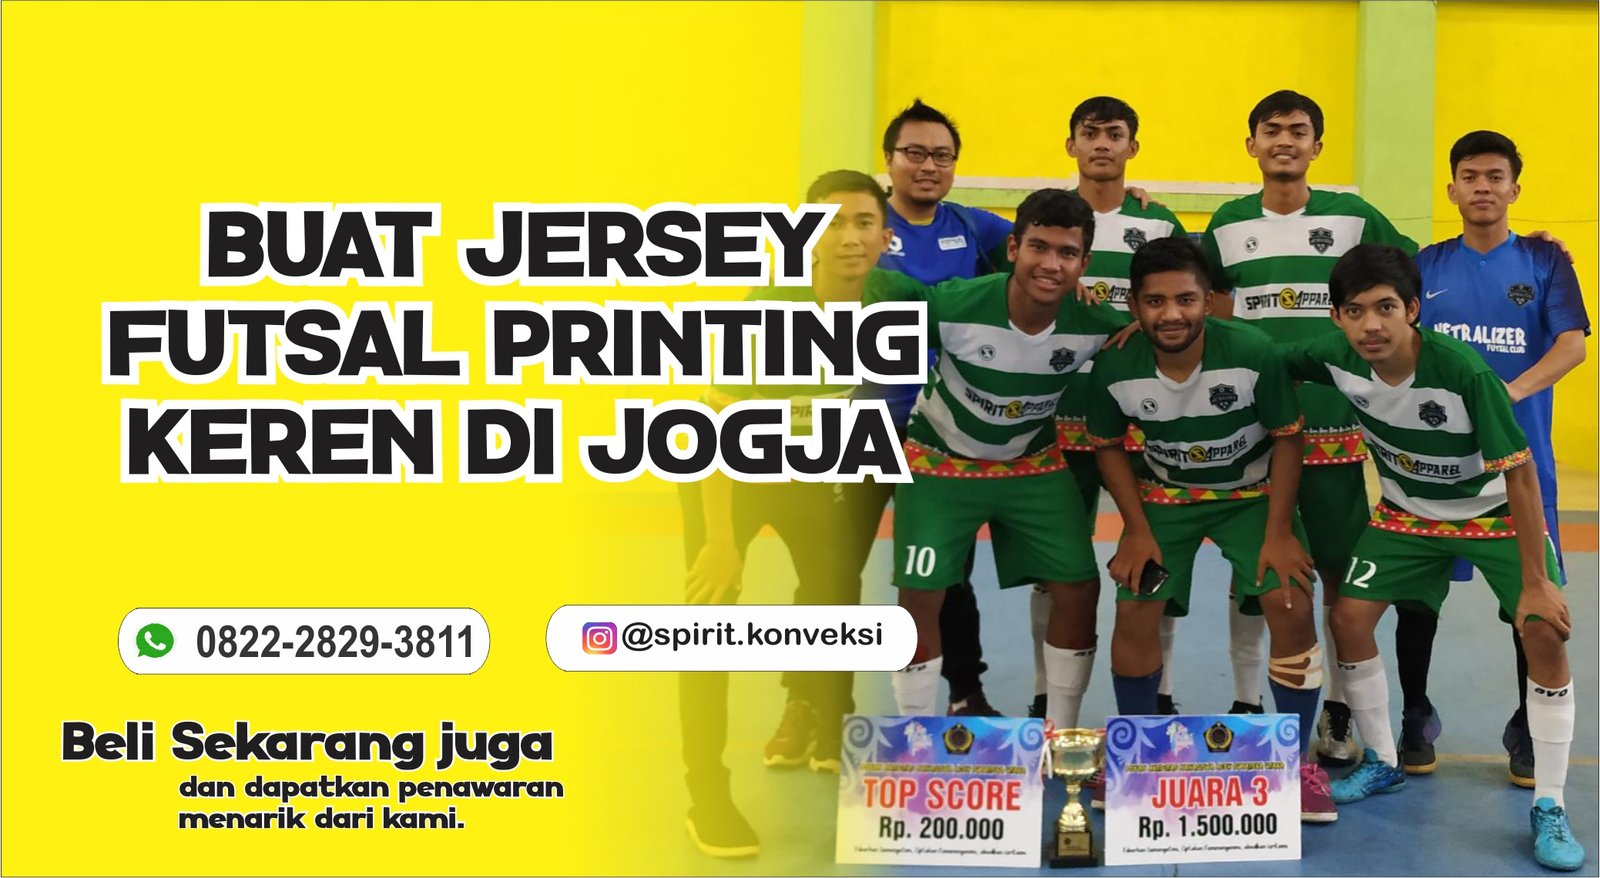 Jersey Futsal Printing keren